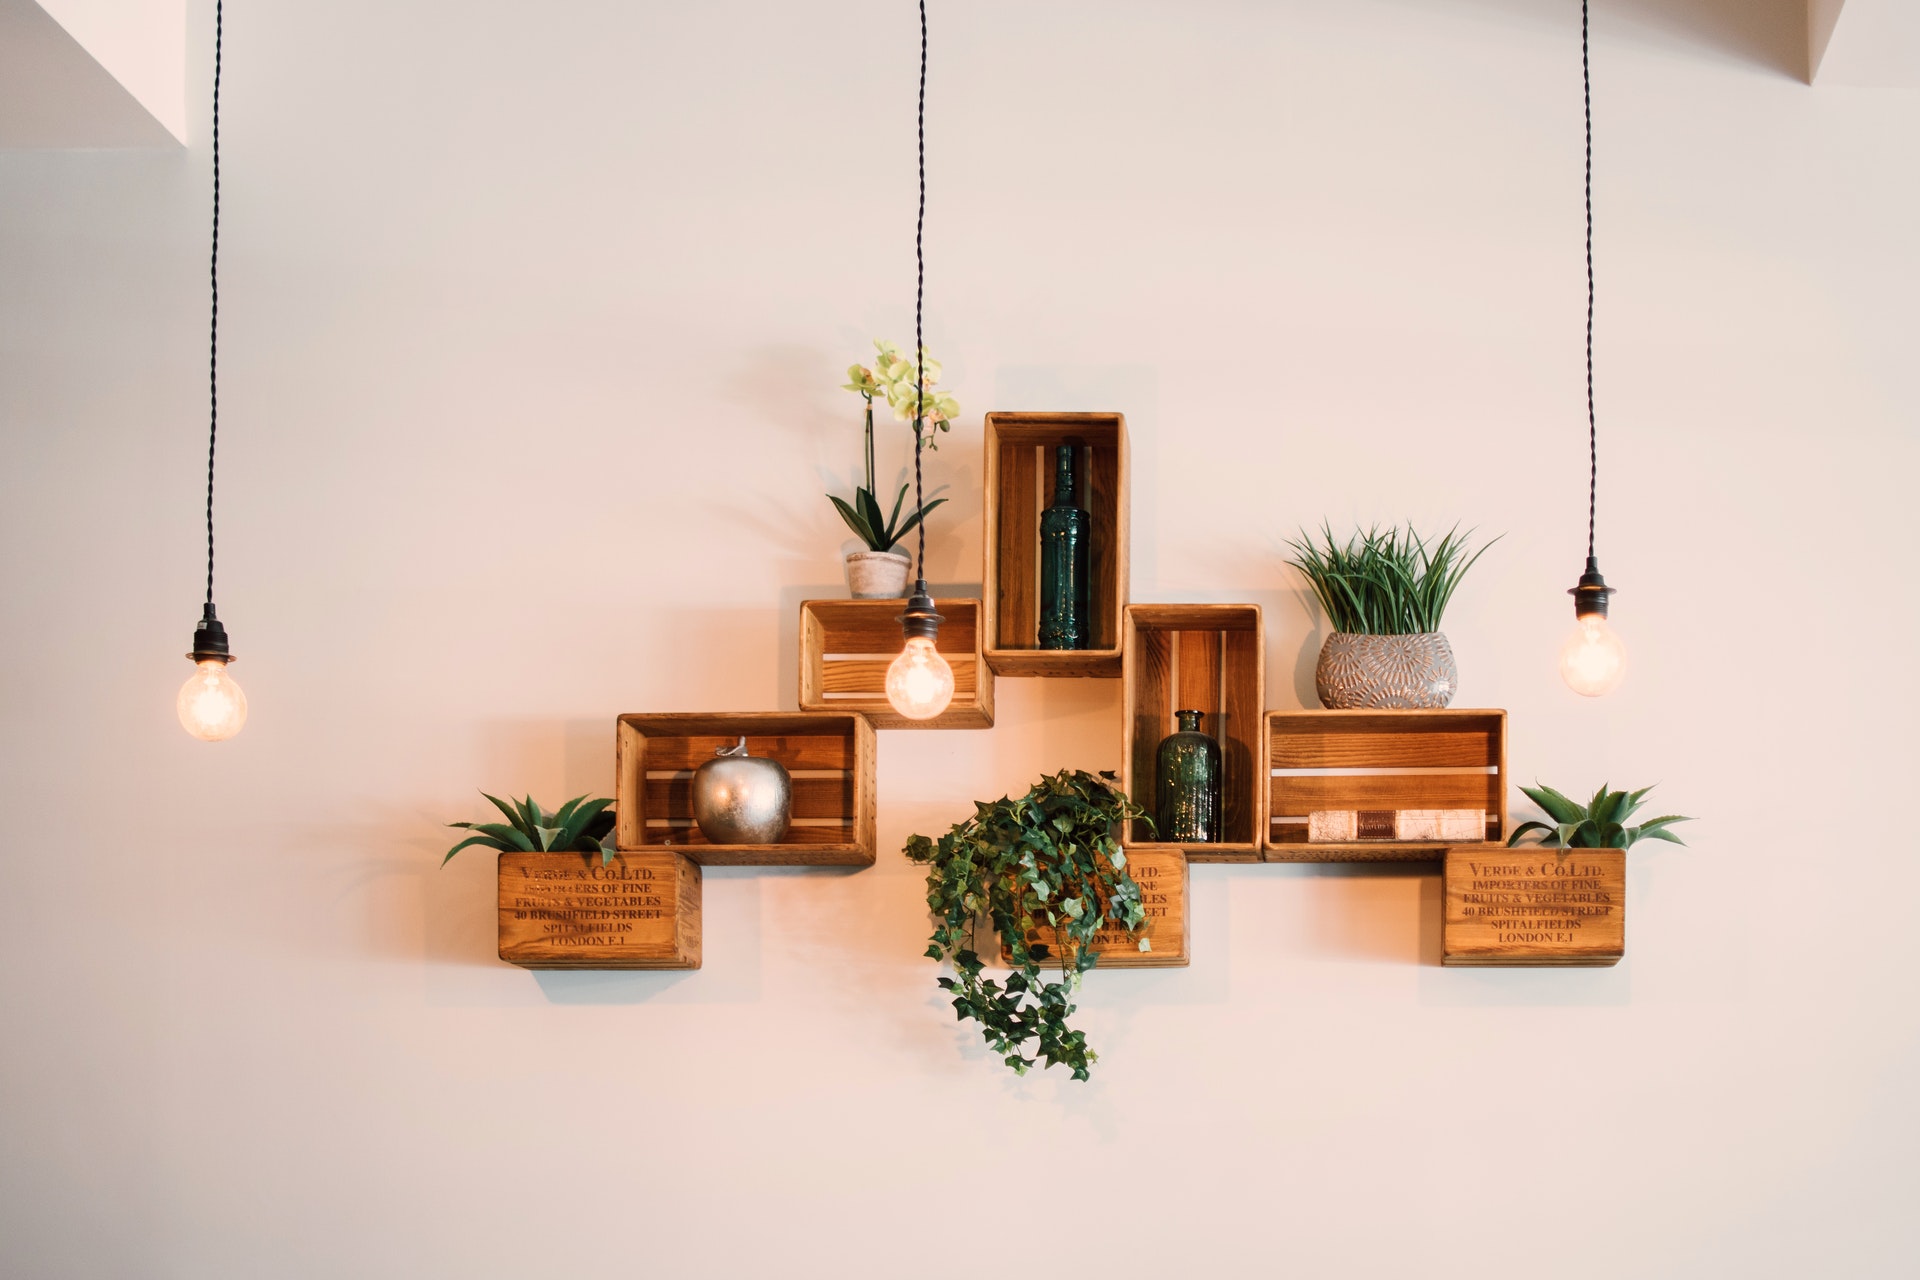 Plant hack  Home decor hooks, Diy home decor projects, Diy home decor easy